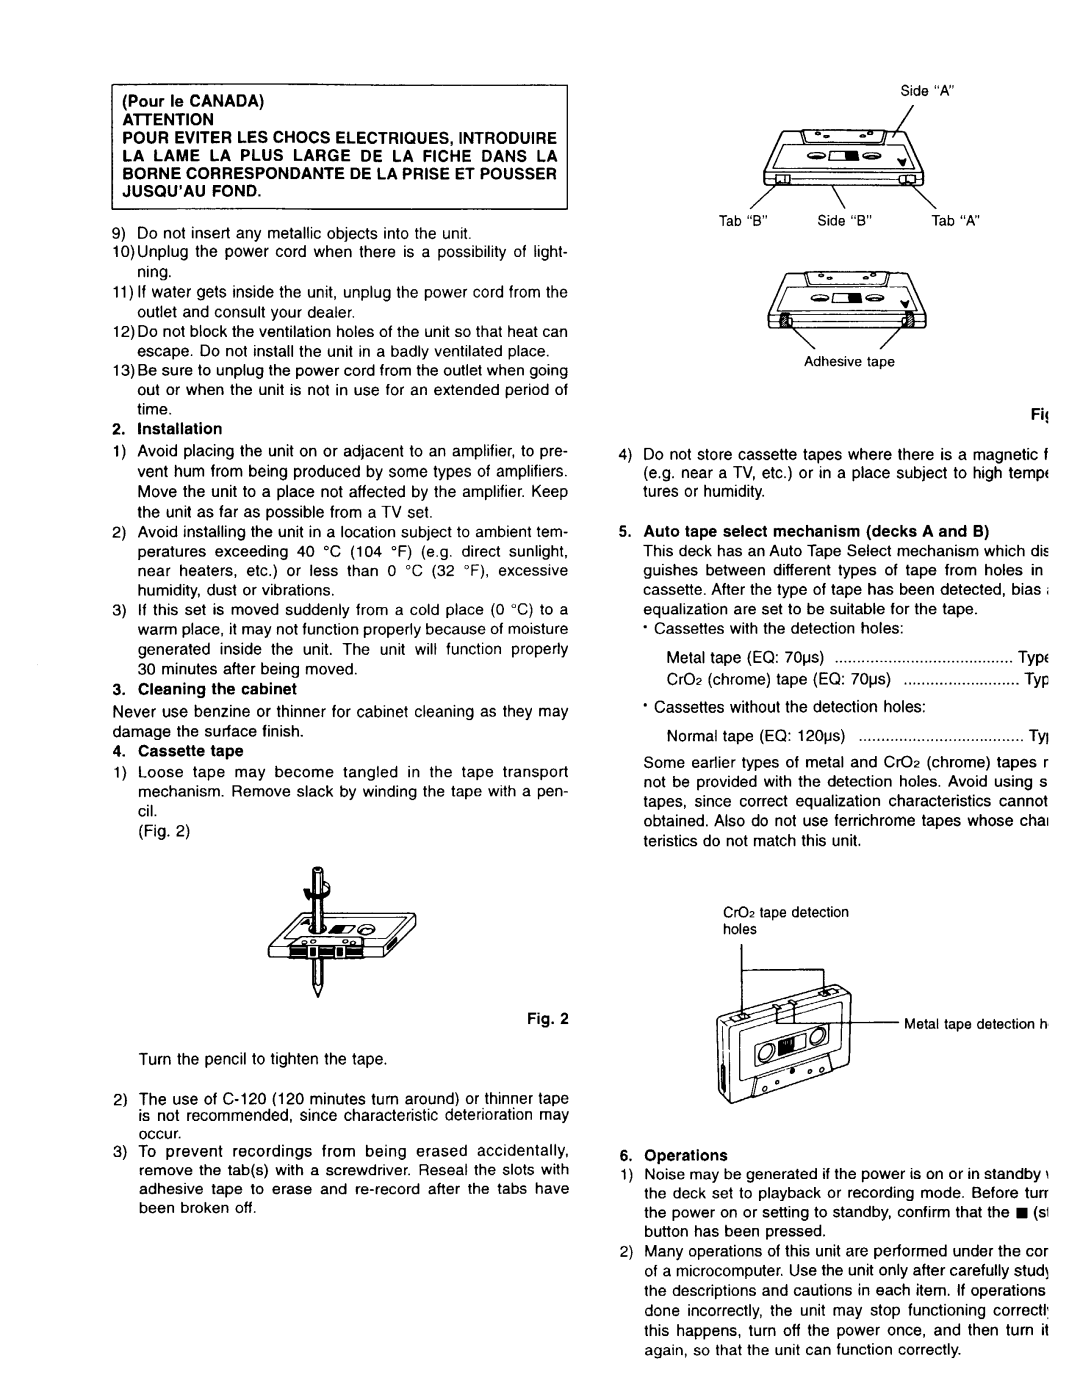 JVC TD-W354 B/J manual 